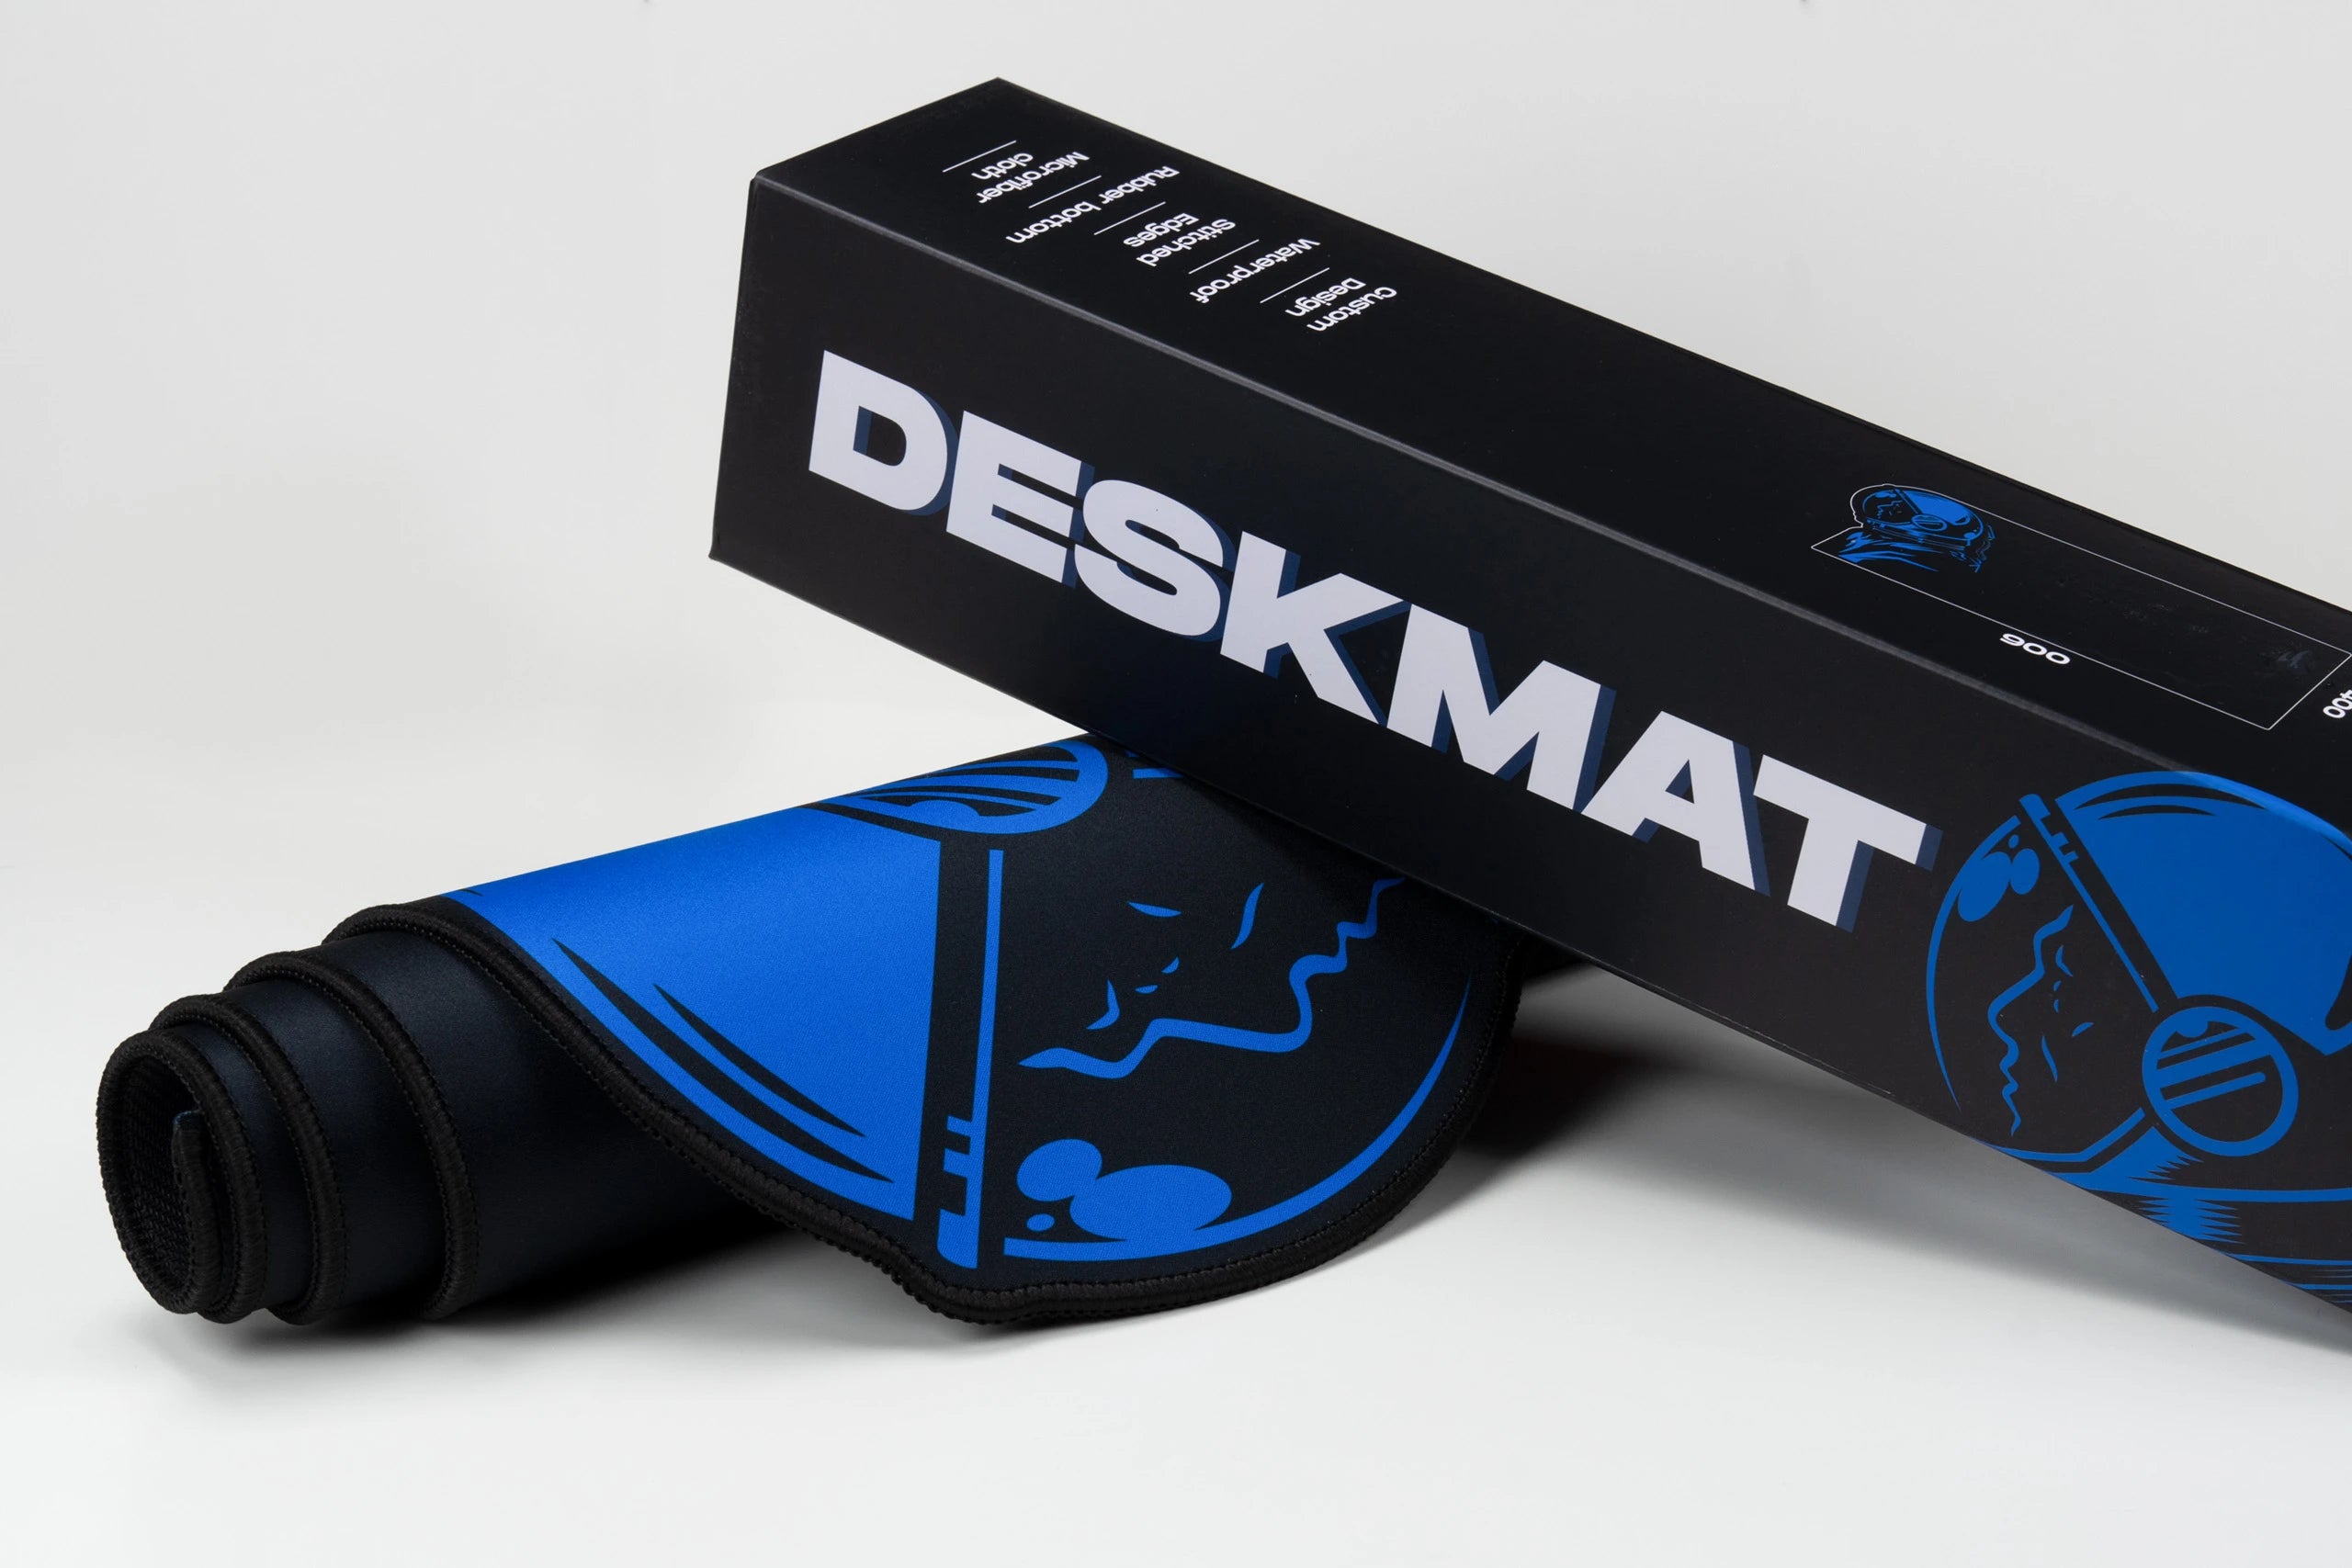 Deskmat Mousepad QwertyKey Spaceman Neregulat 4mm margini cusute